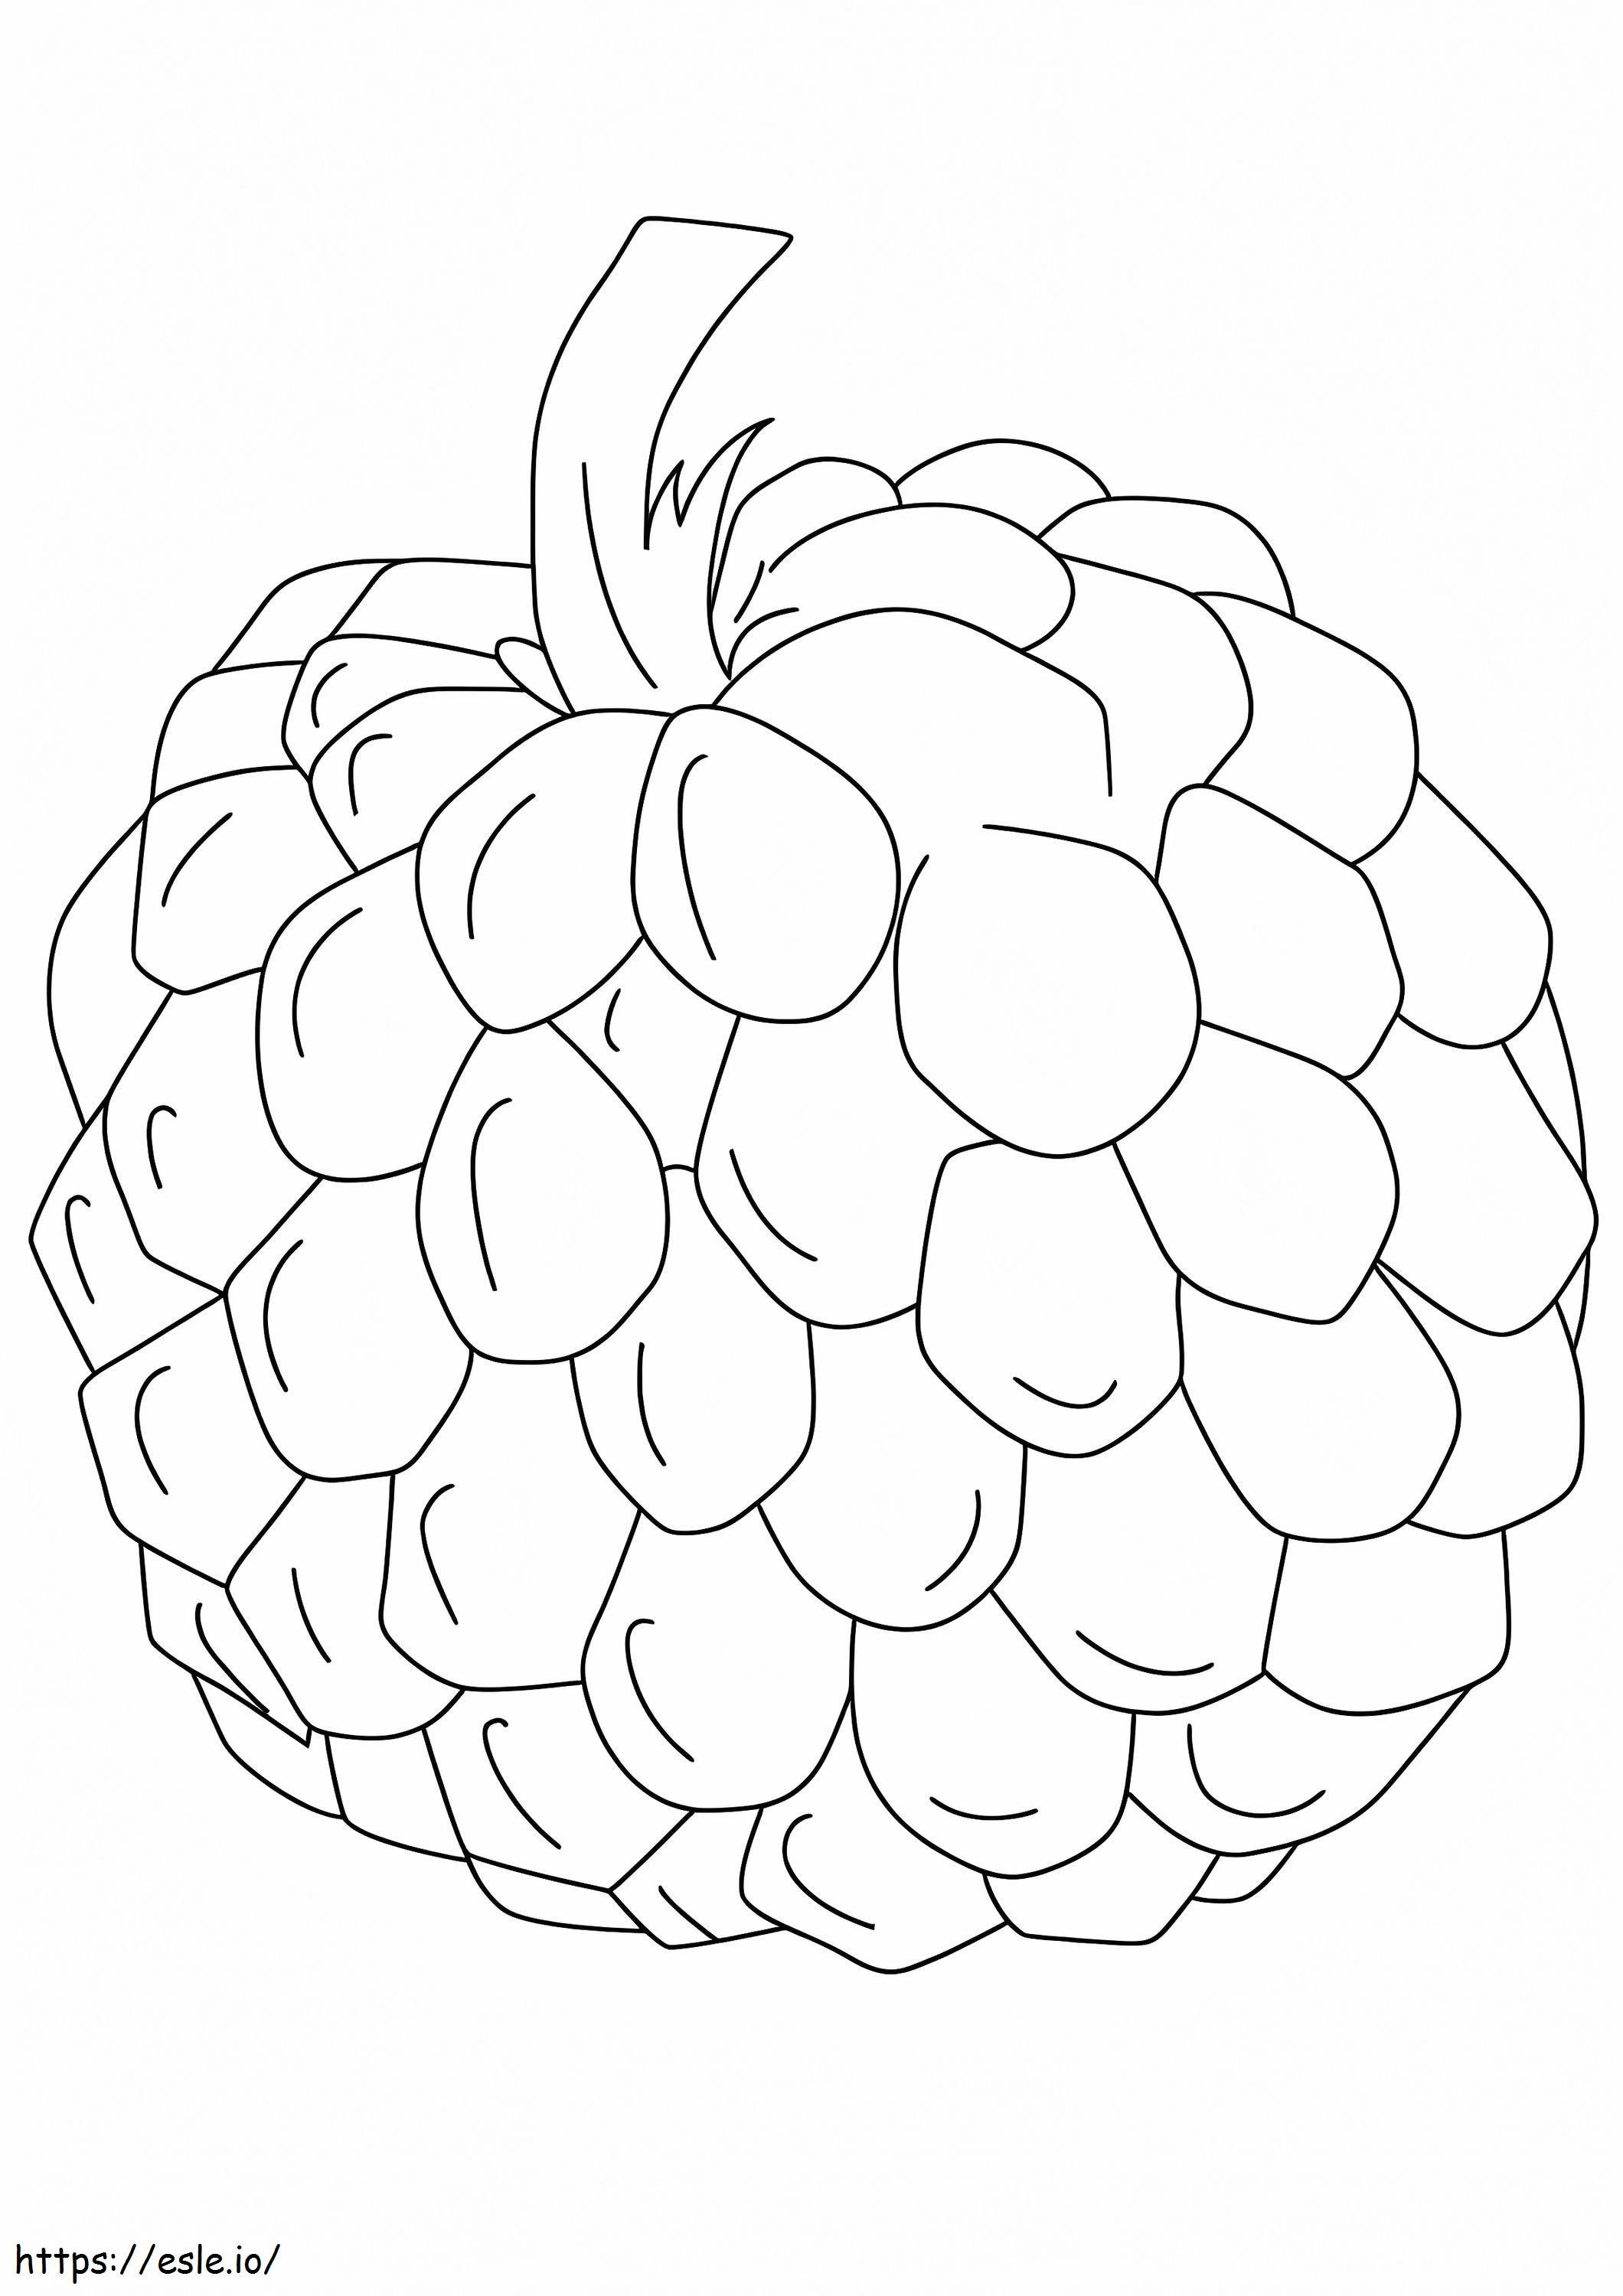 Plain Custard Apple coloring page